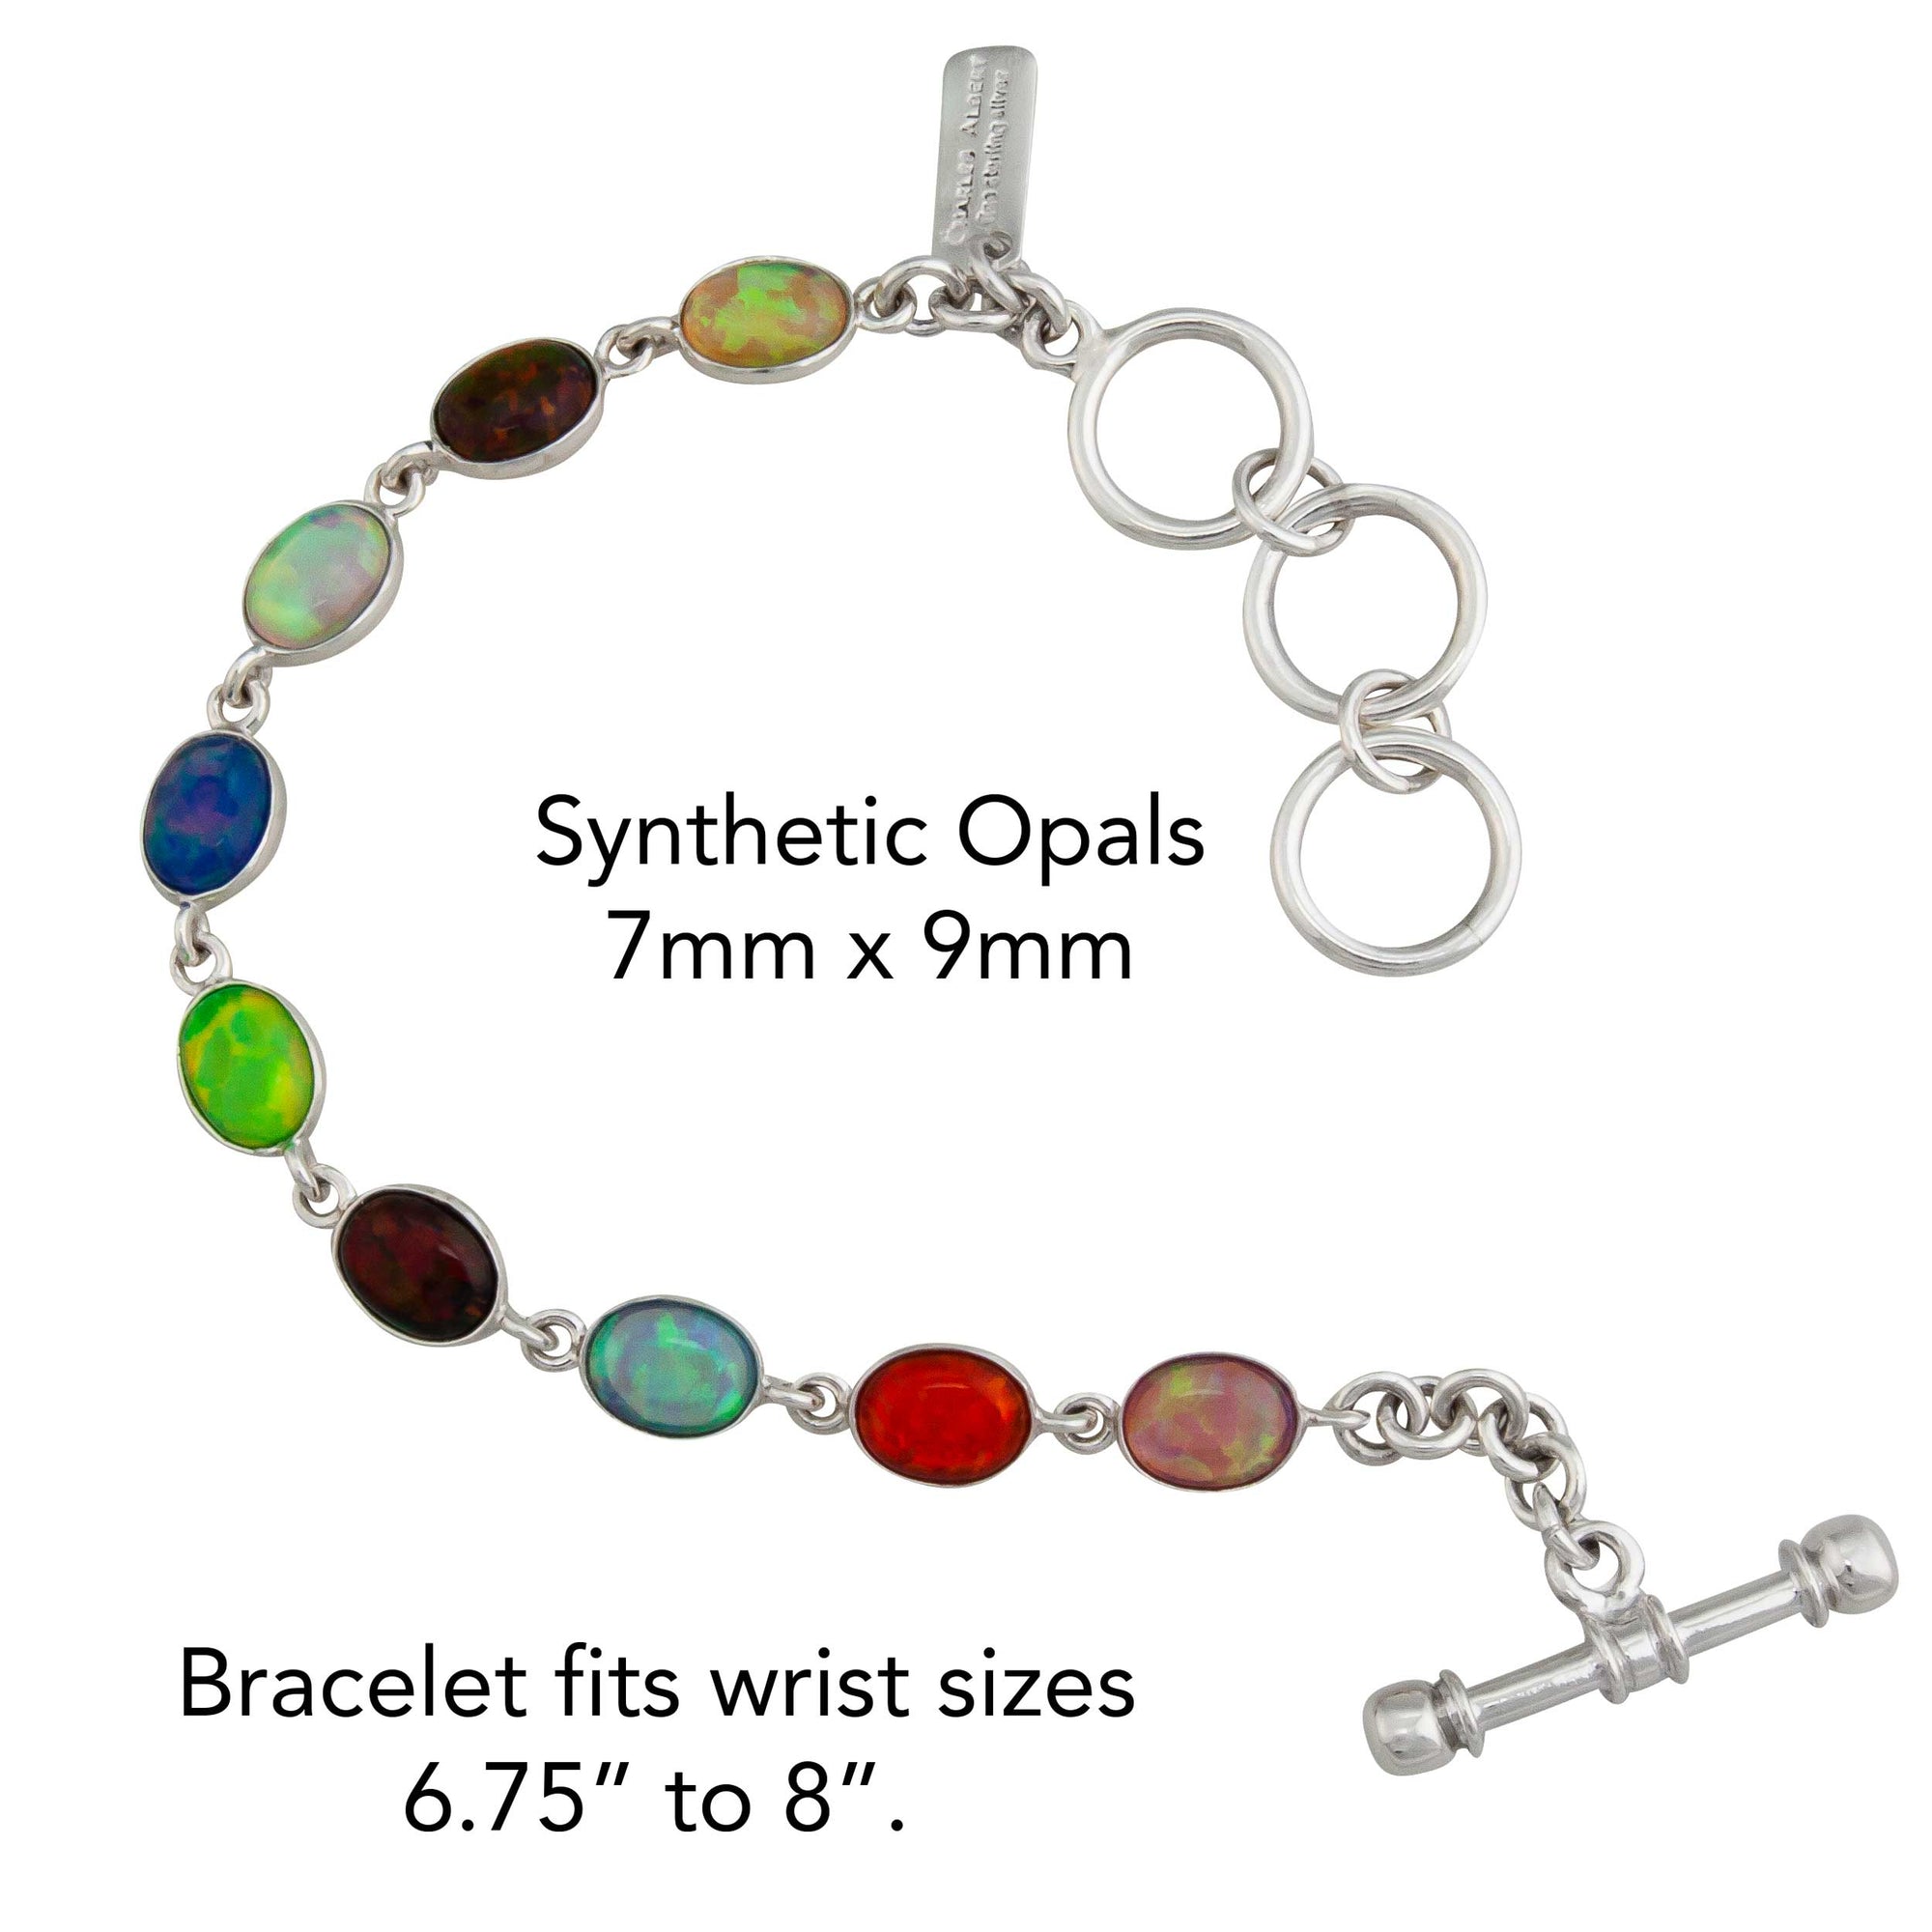 Evil Eye, Pink Opal Bracelet | Buy Online Pink Opal Crystal Evil Eye  Bracelet - Shubhanjali